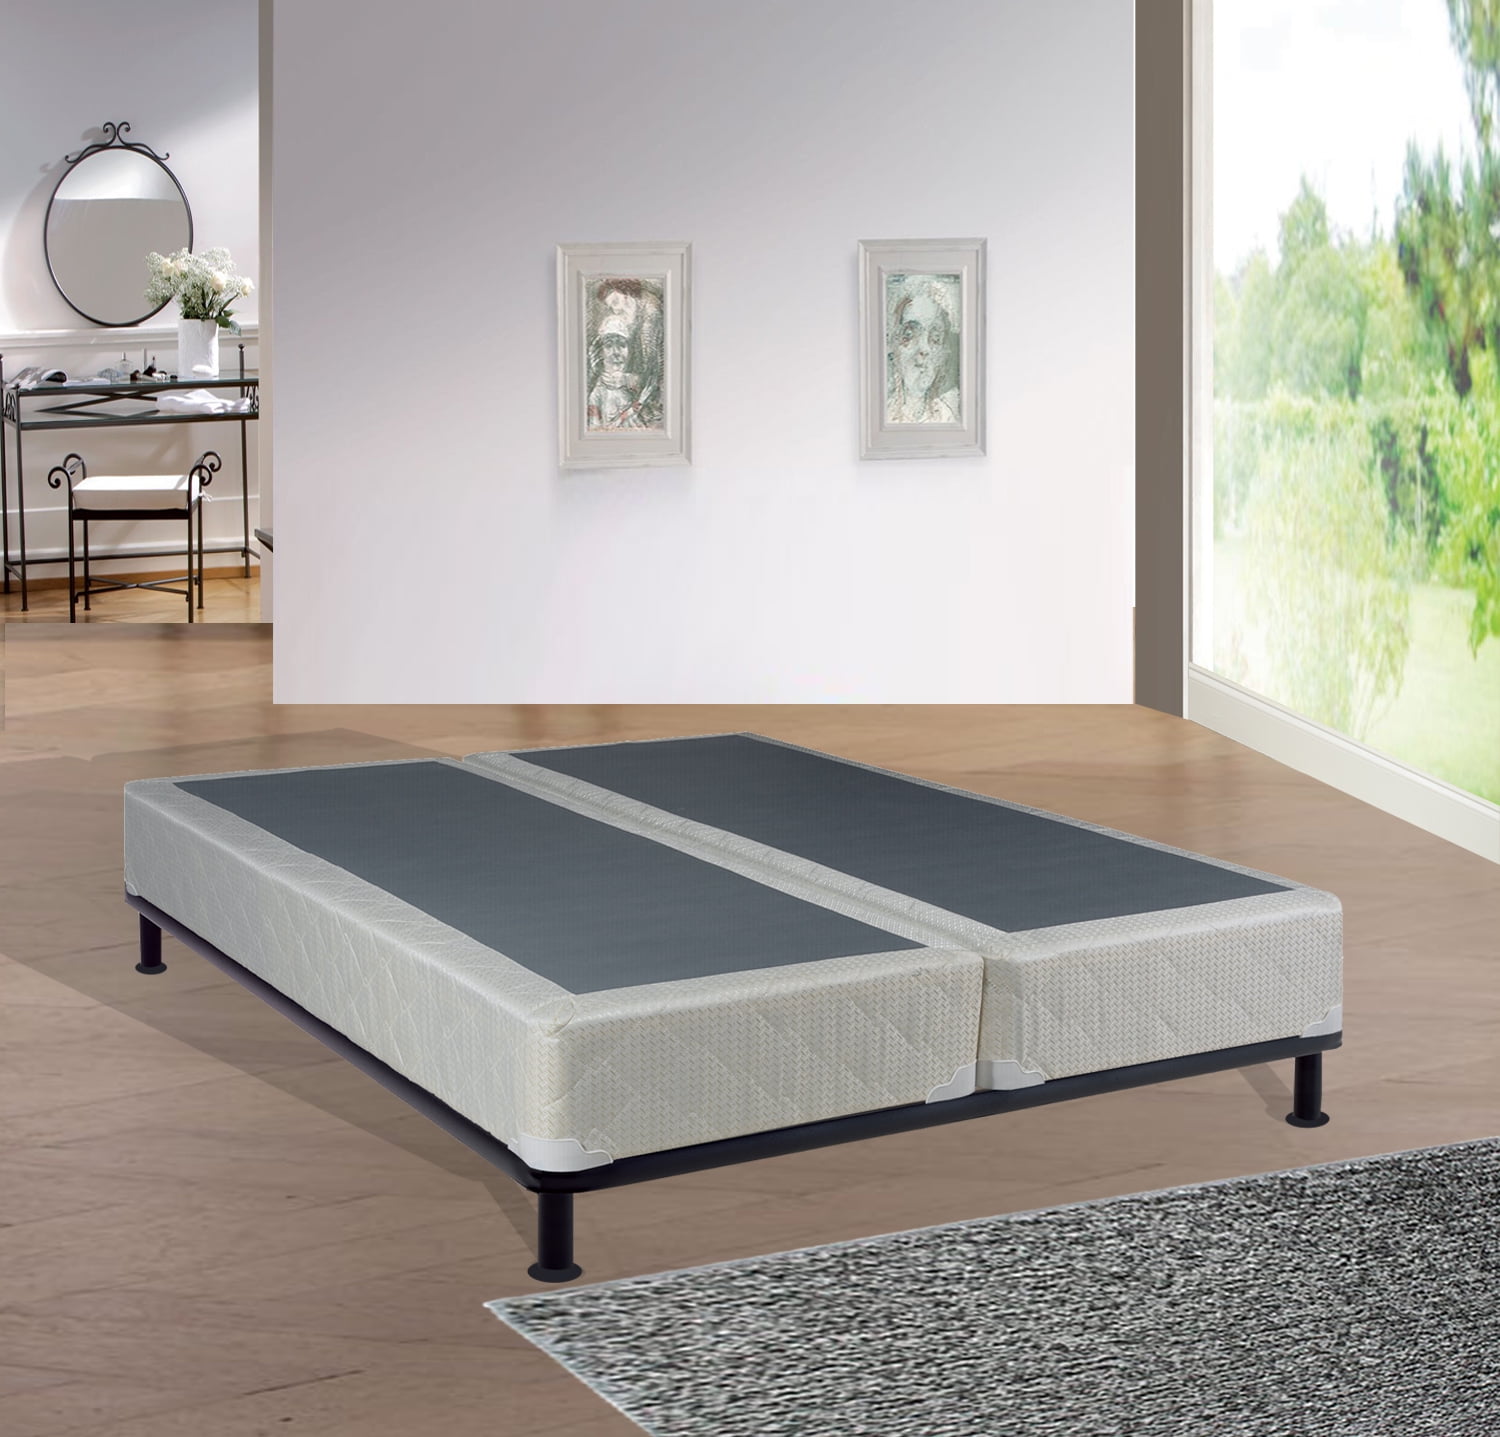 Continental Sleep Comfort Bedding Low Profile 4-inch Mattress Foundation Box Spring Twin